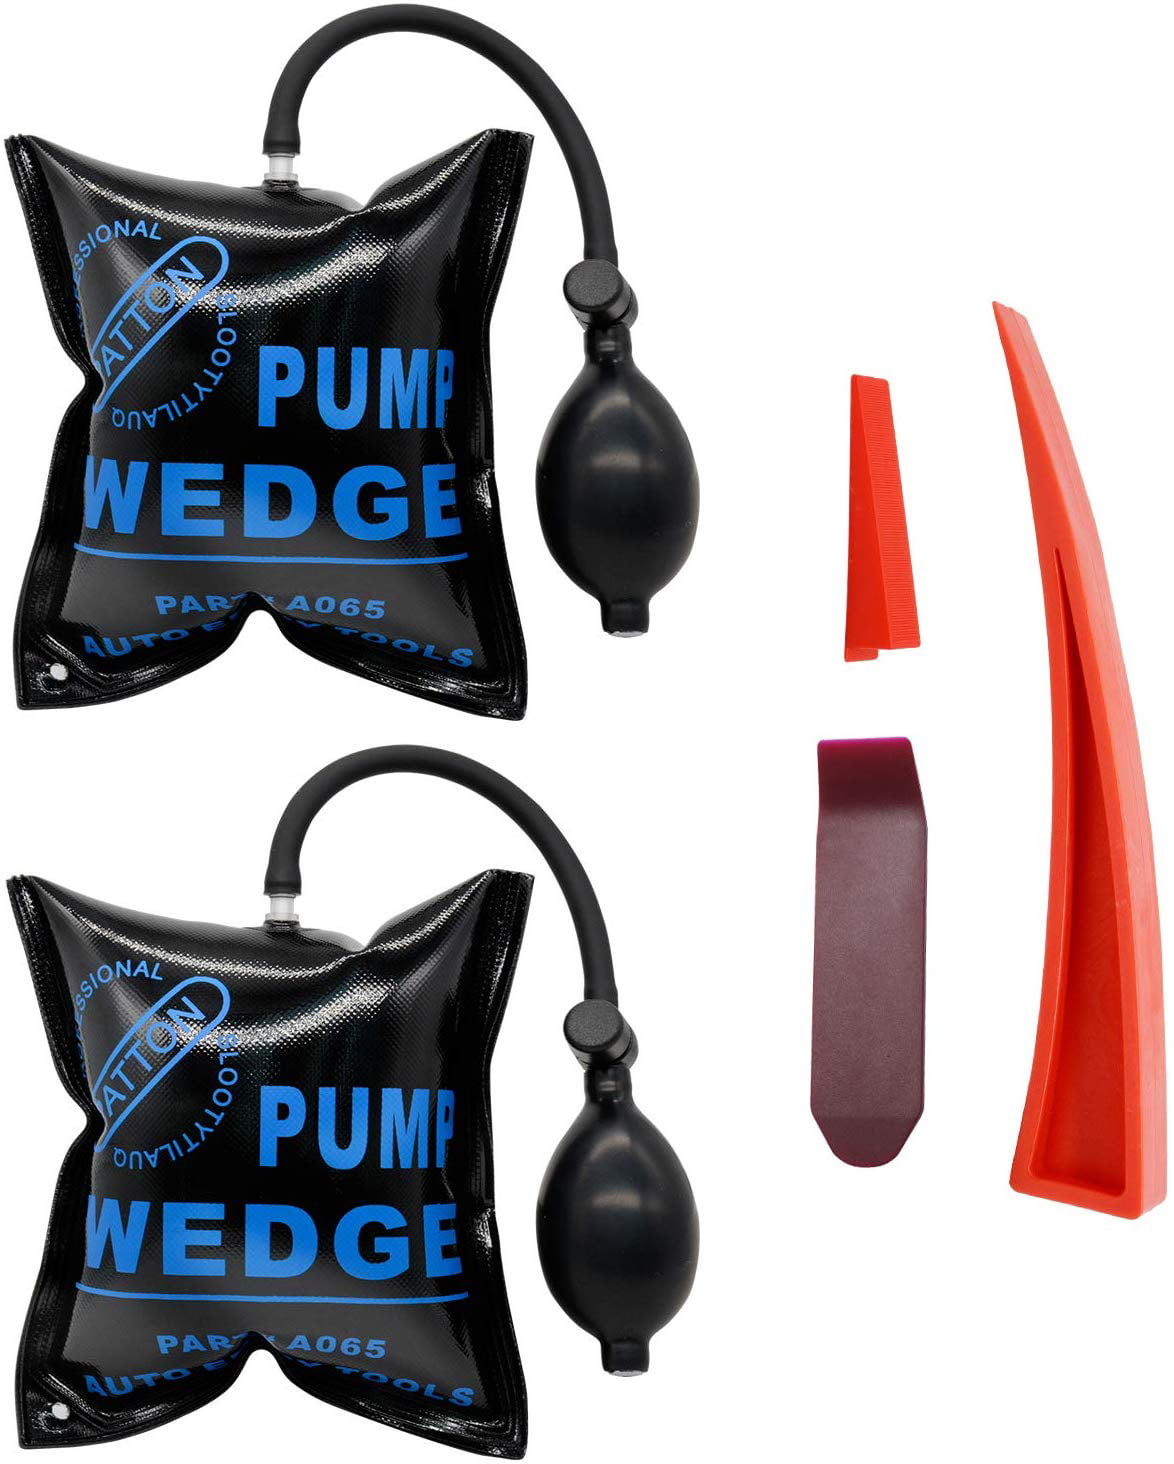 PDR Tools Air Wedge Pump For Car Furniture Door Window Carpenter Inflatable Bag 